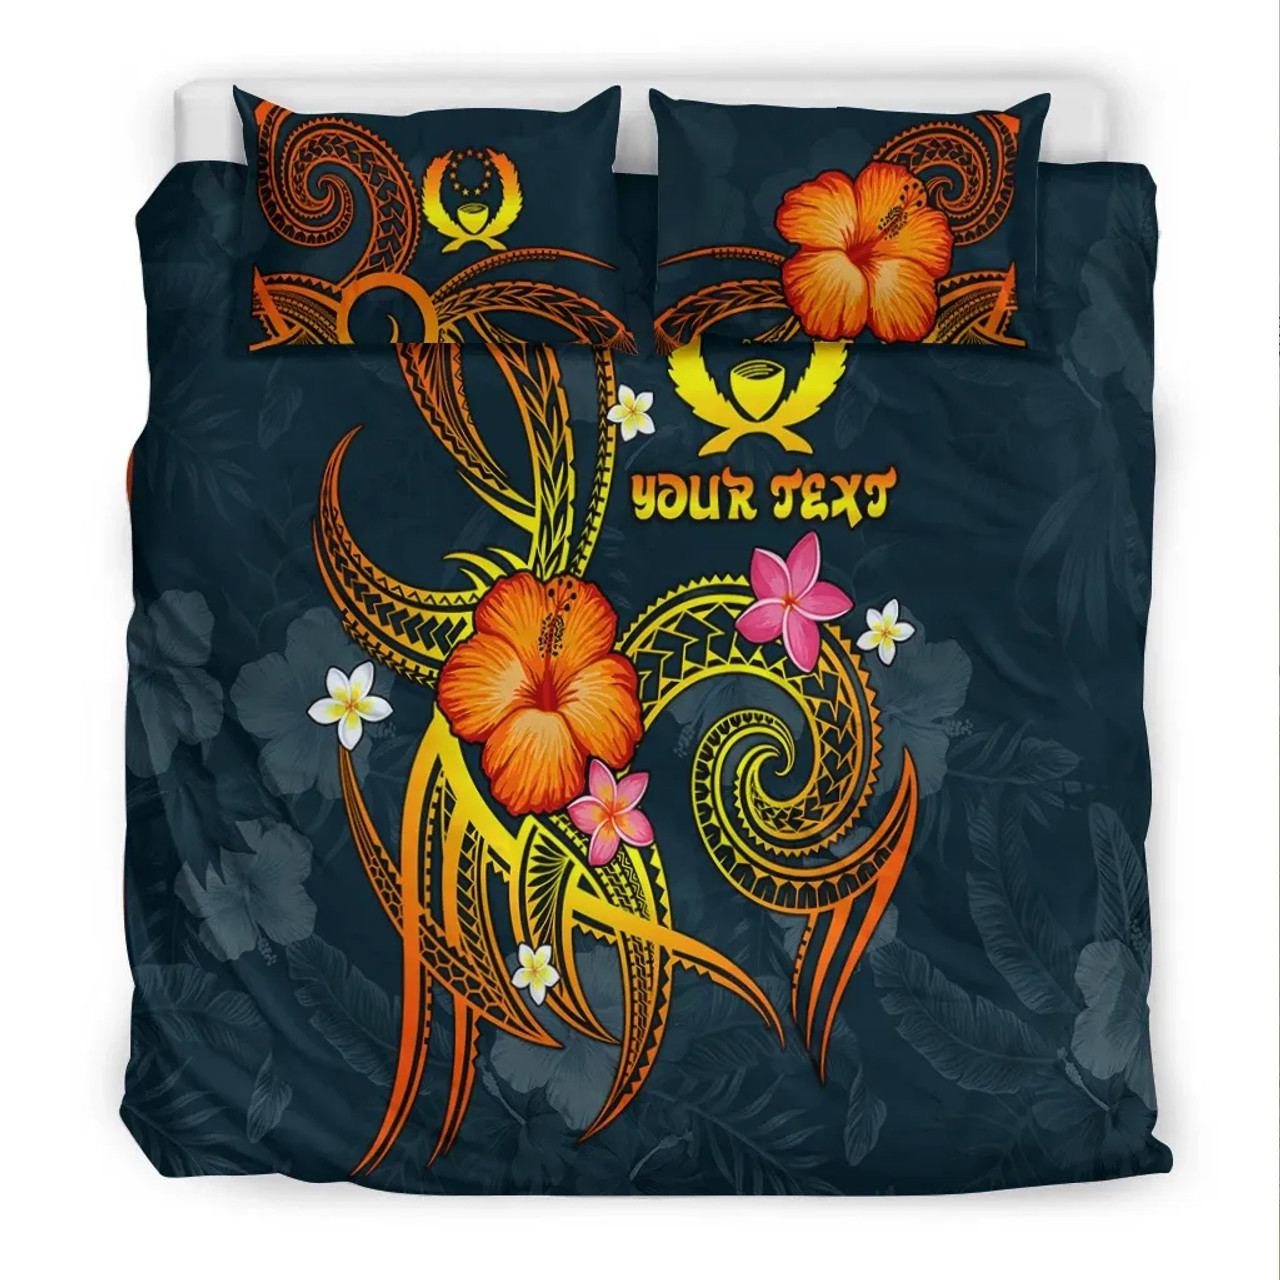 Kosrae Personalised Bedding Set - Kosrae Flag In Polynesian Tattoo Style (Black)4